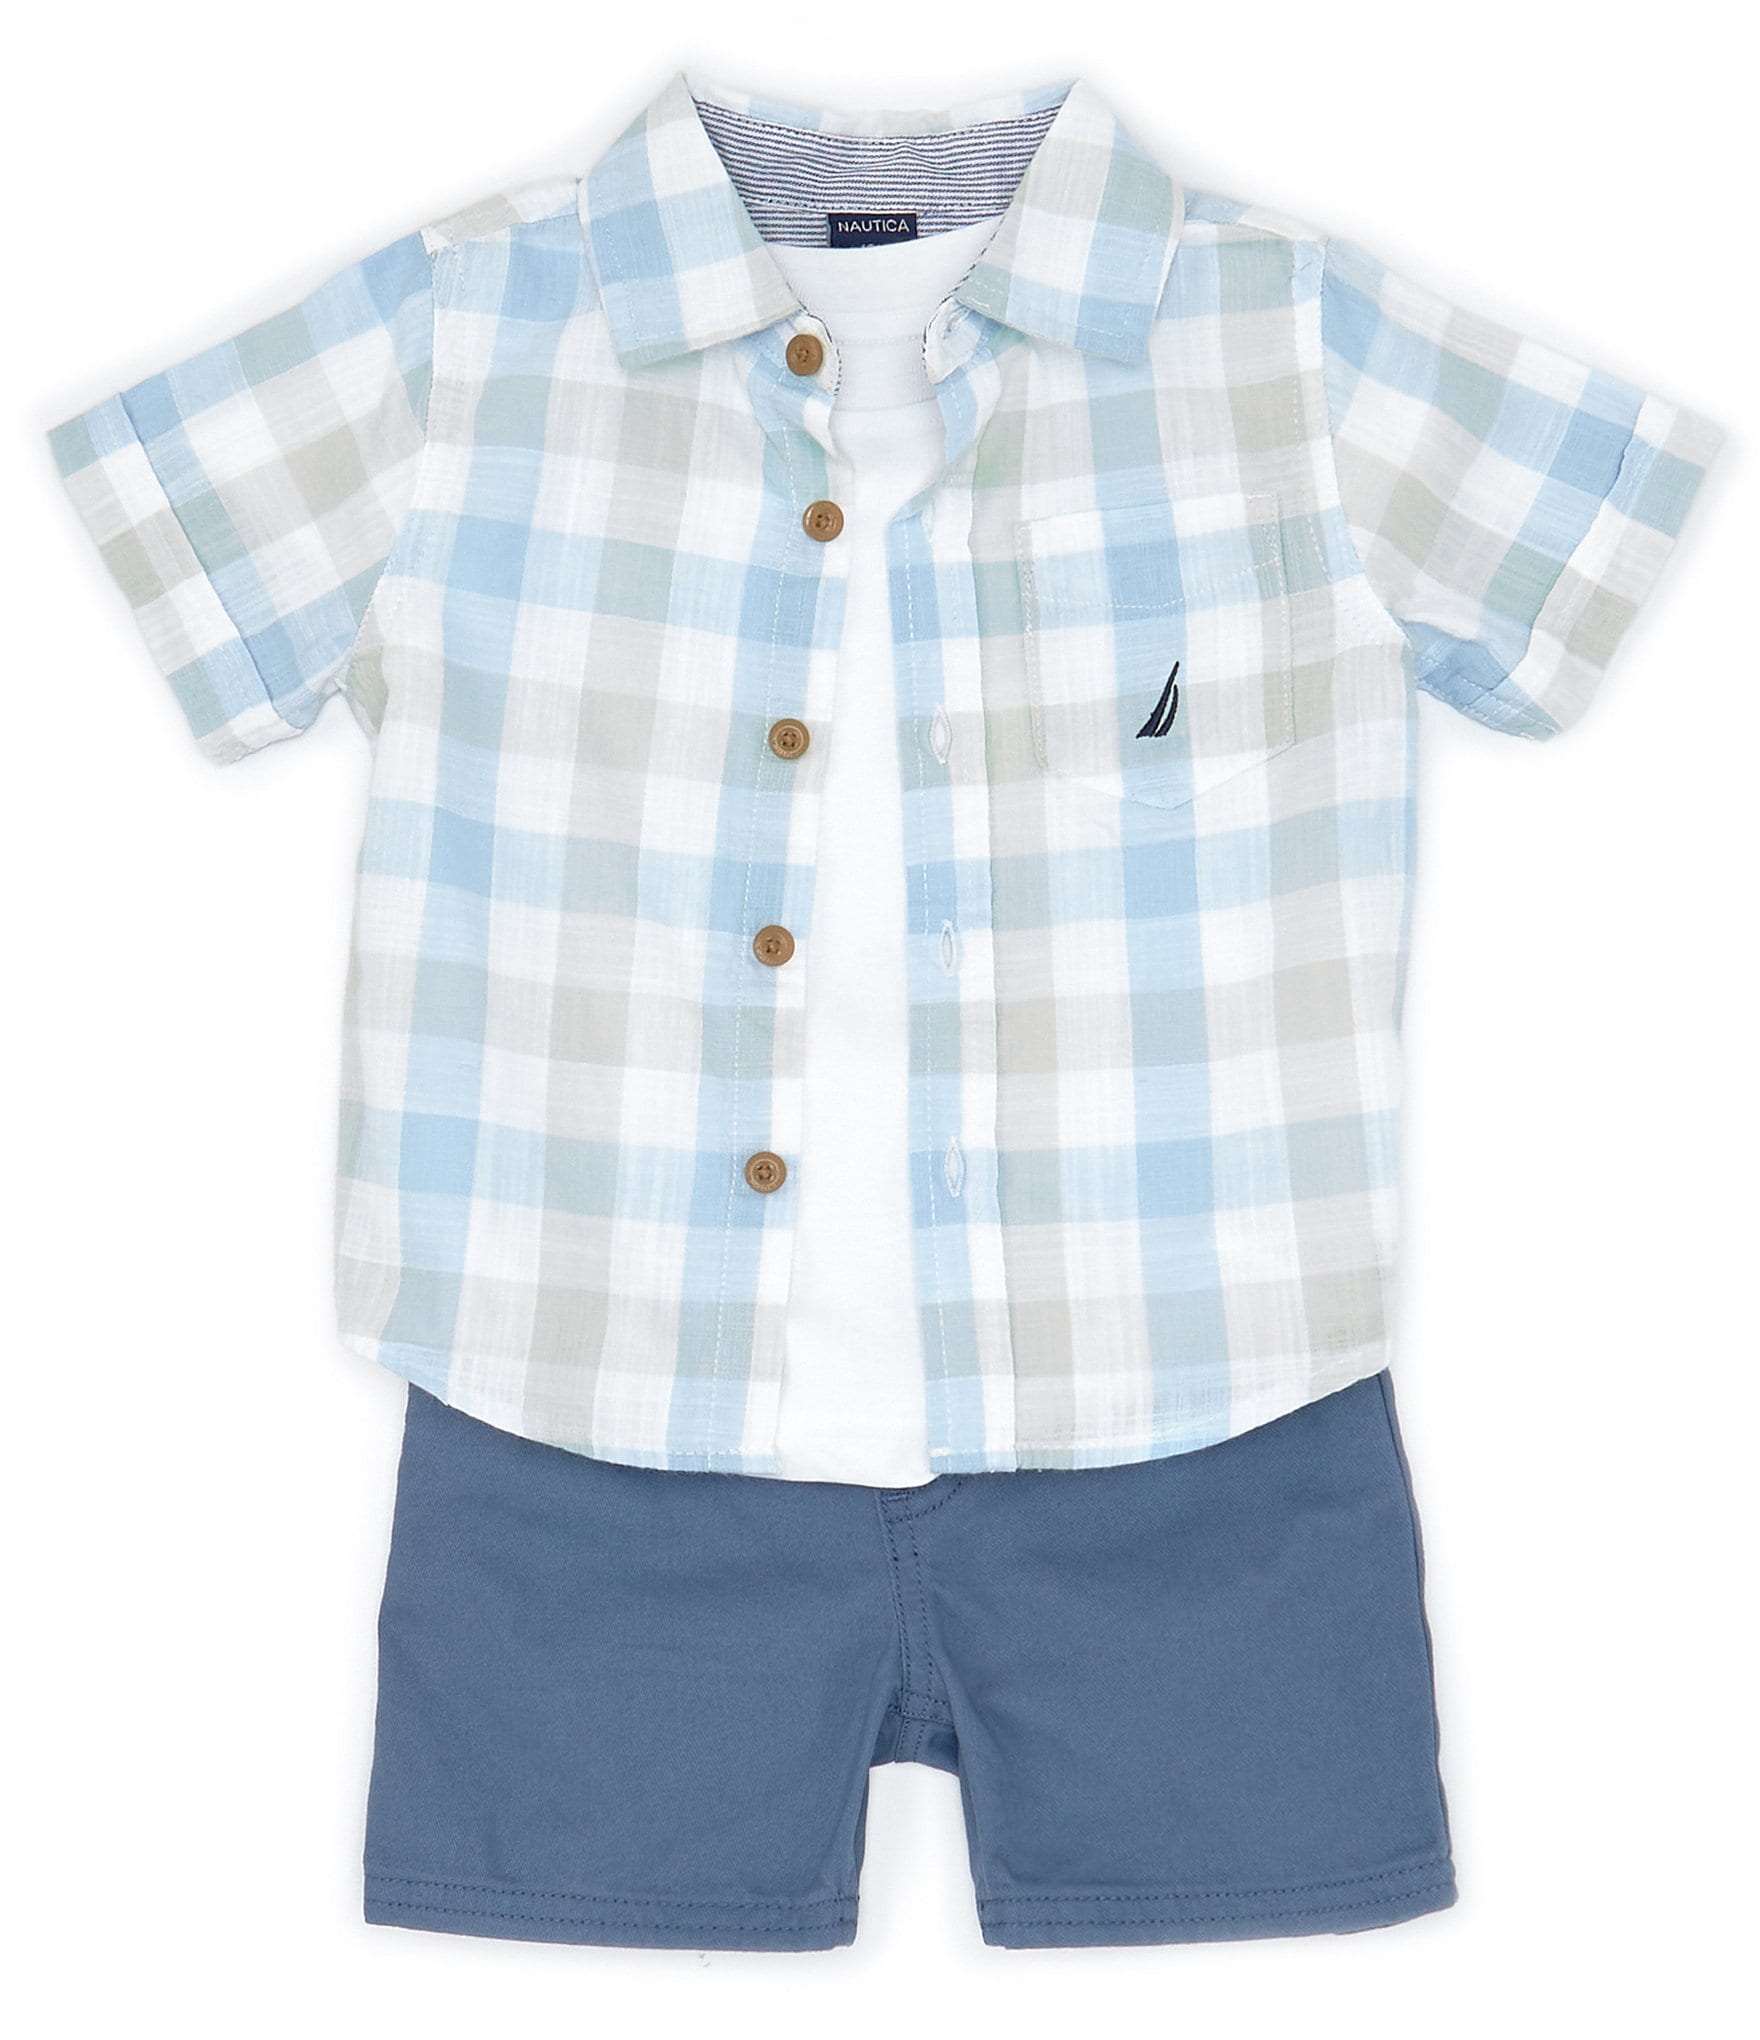 2pcs Baby Boy Short-sleeve Plaid Shirt and Solid Shorts Set